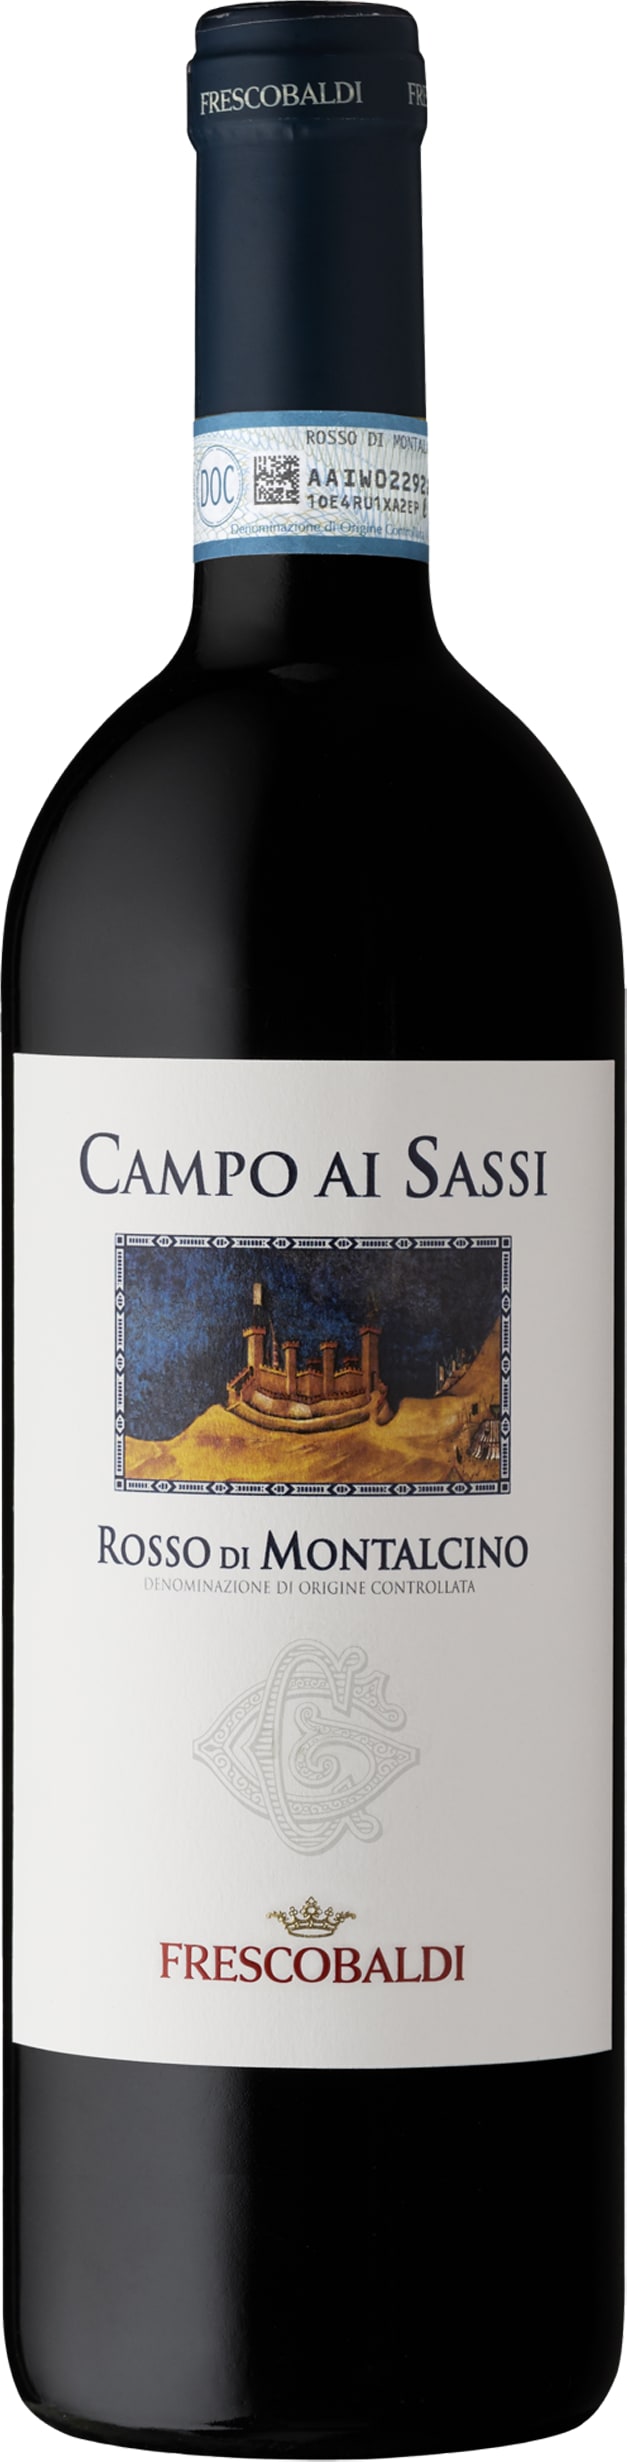 Frescobaldi Campo Ai Sassi 2022 75cl - Buy Frescobaldi Wines from GREAT WINES DIRECT wine shop